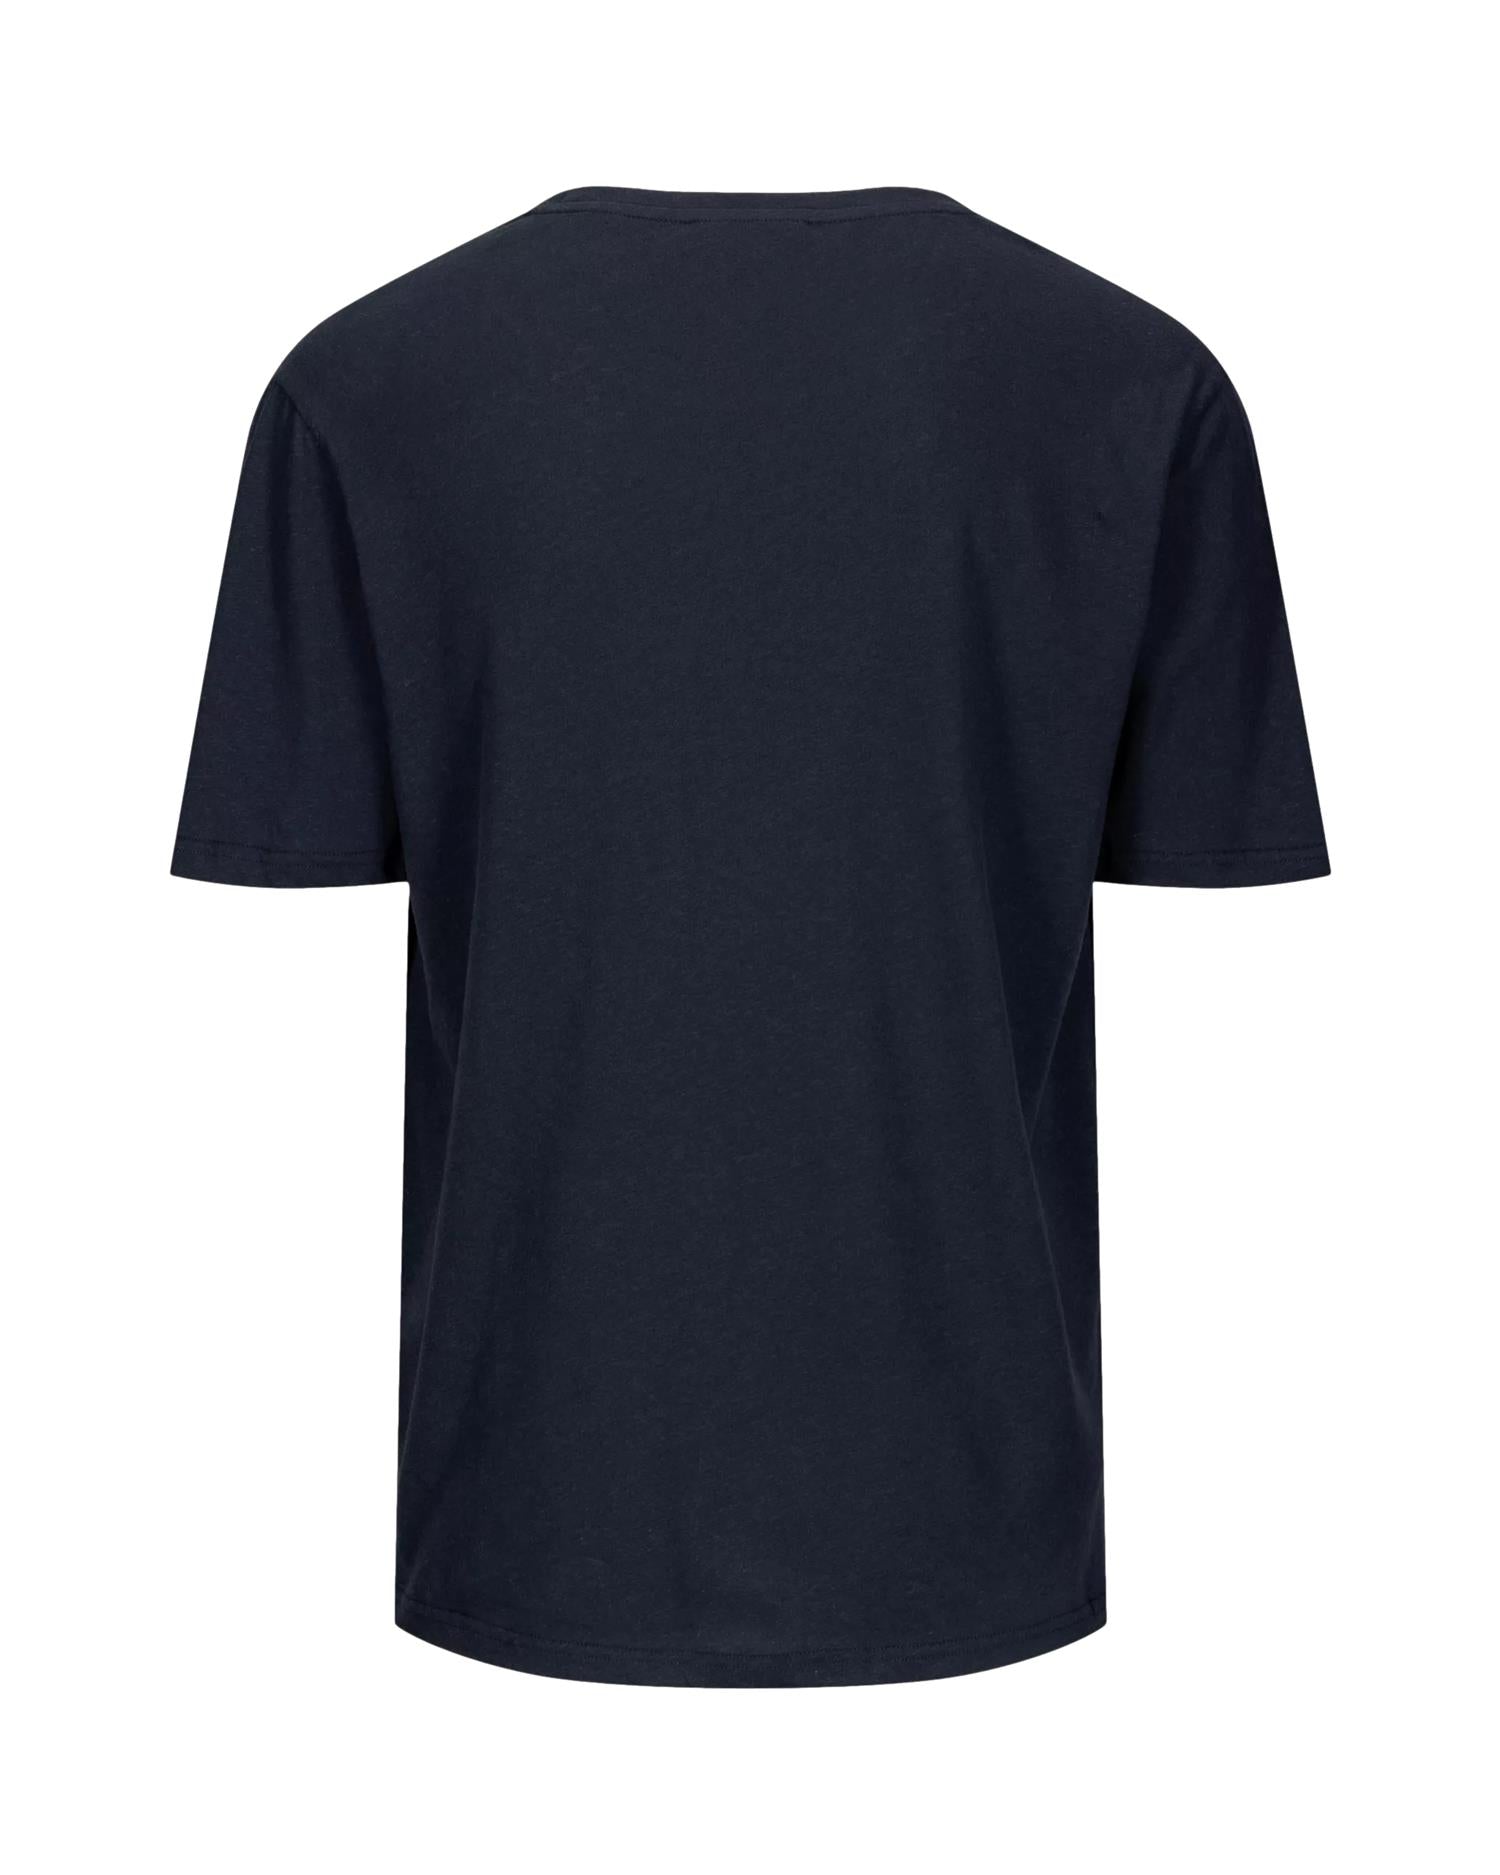 Amundsen Oslo Tee T-shirt Navy - modostore.no